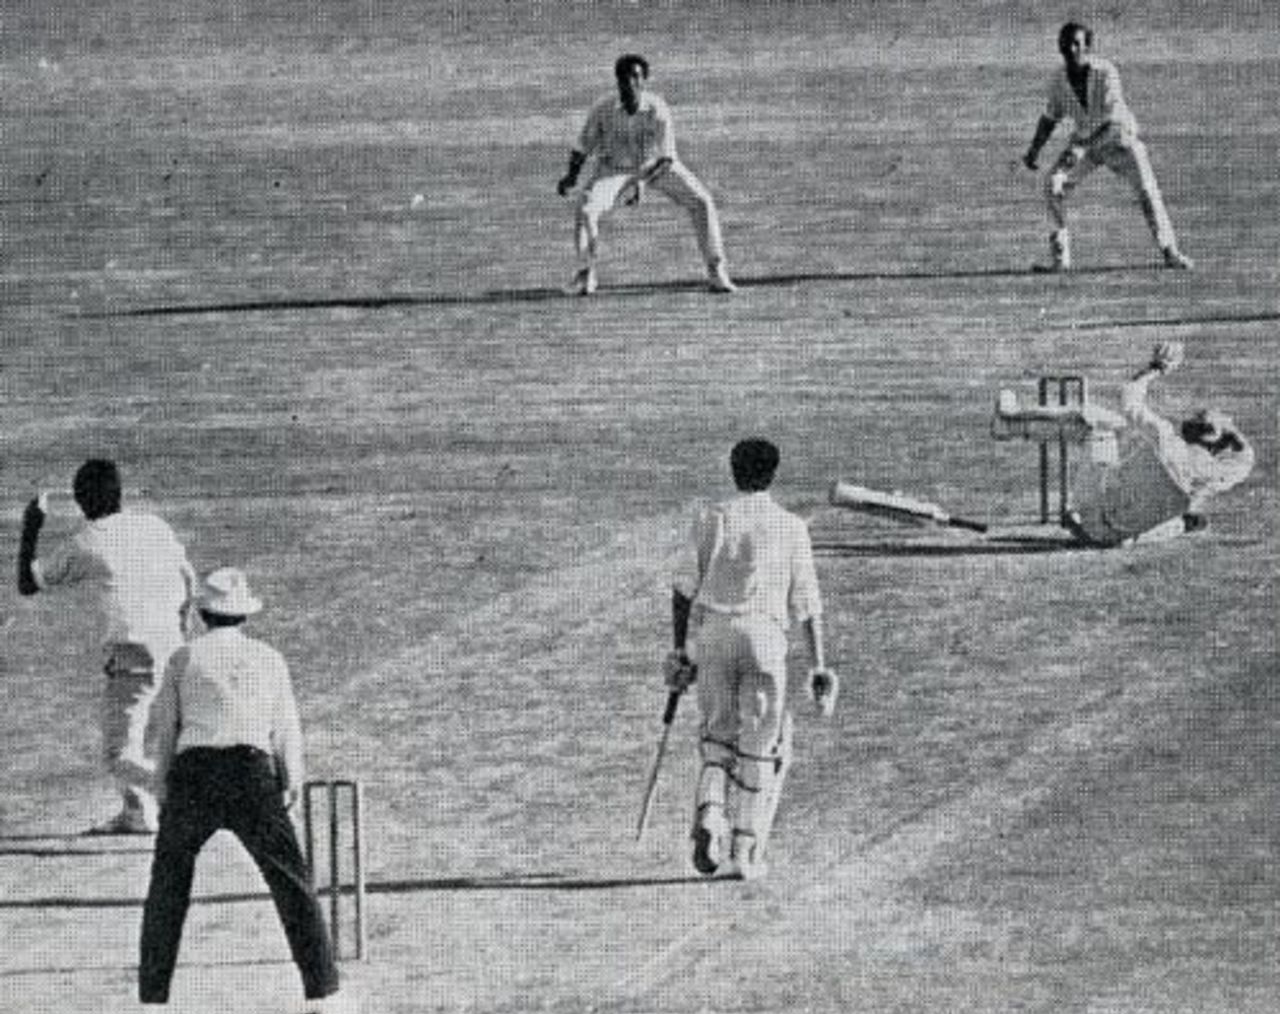 Terry Jenner is struck by John Snow, Australia v England, 7th Test, Sydney, February 13 1971